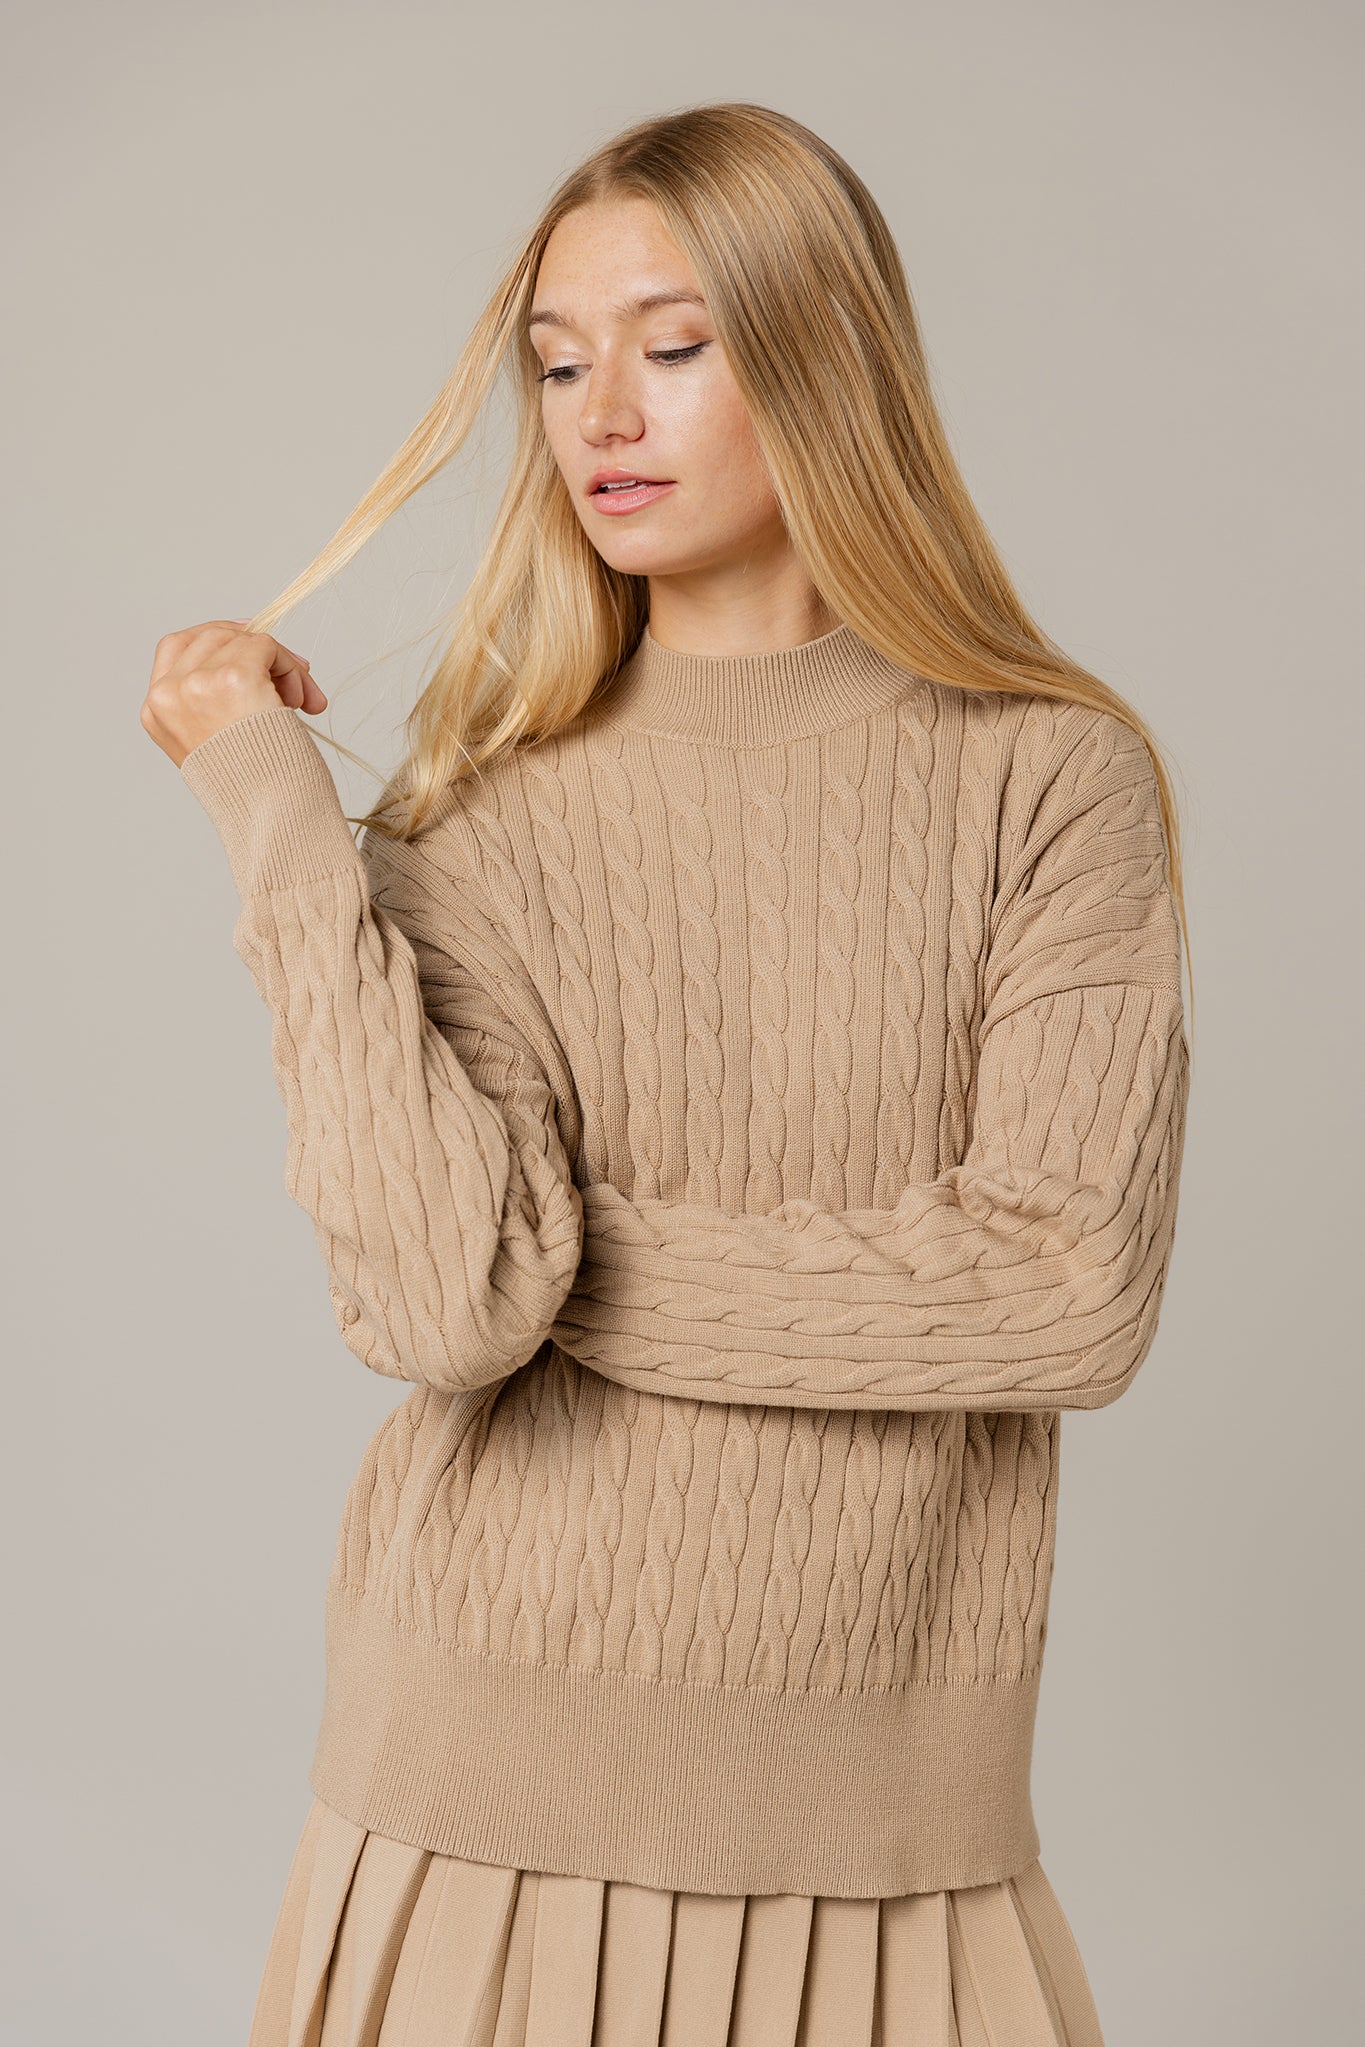 Solana Sweater in Latte